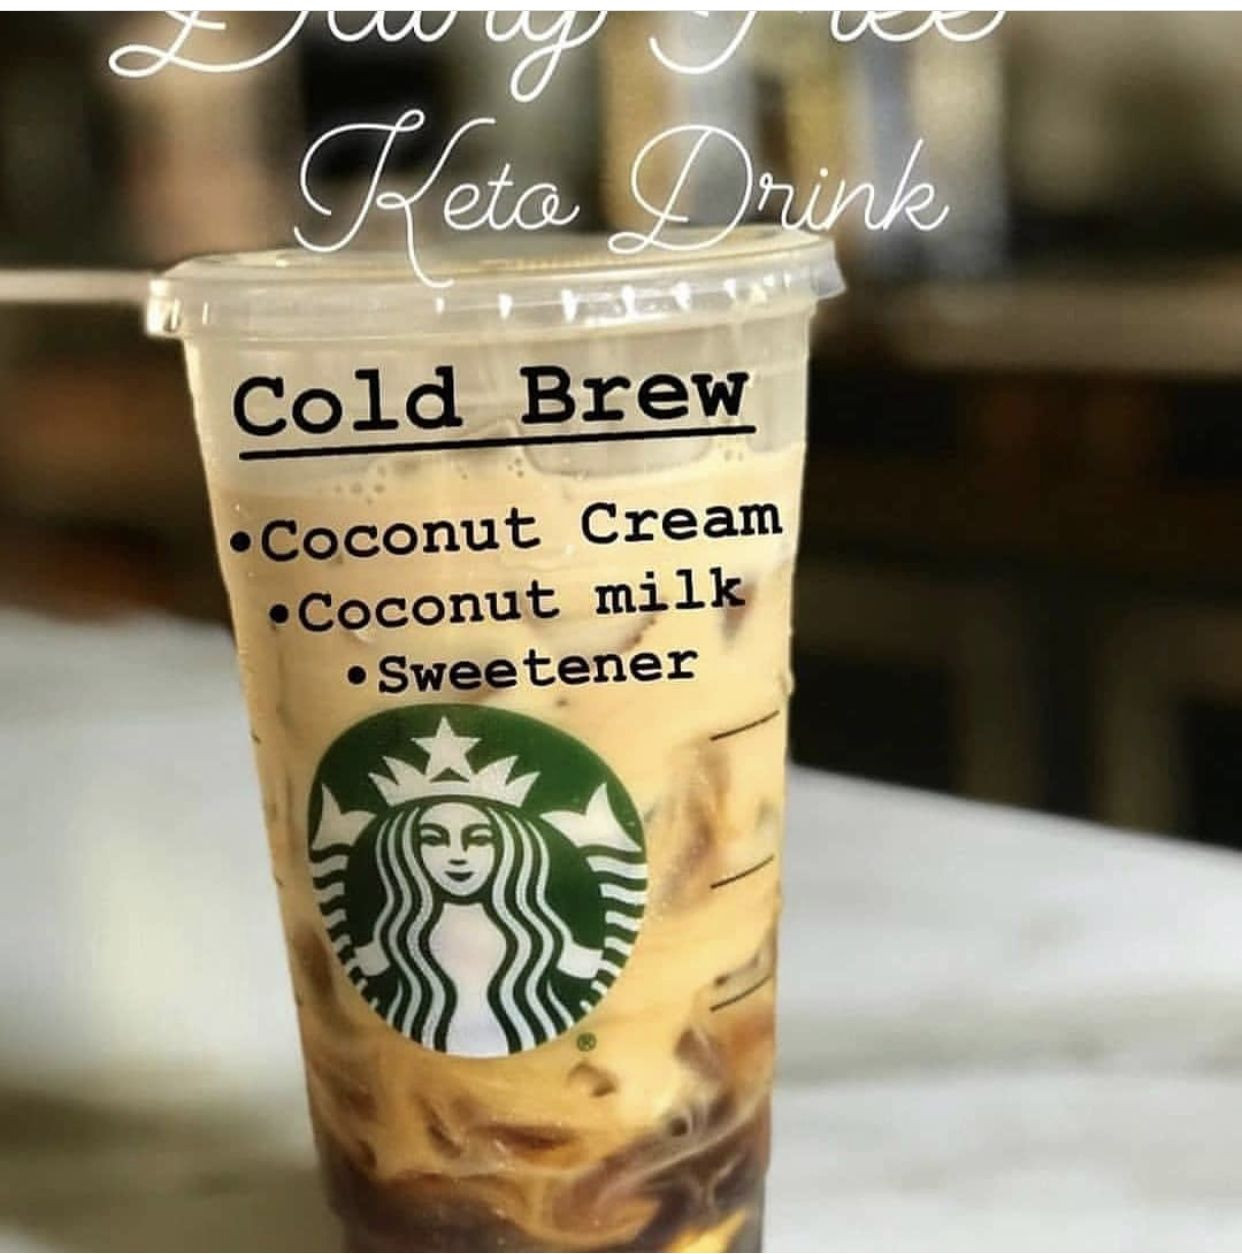 Dairy Free Keto Starbucks Drinks
 Starbucks Keto Coffee Cold Brew Coconut